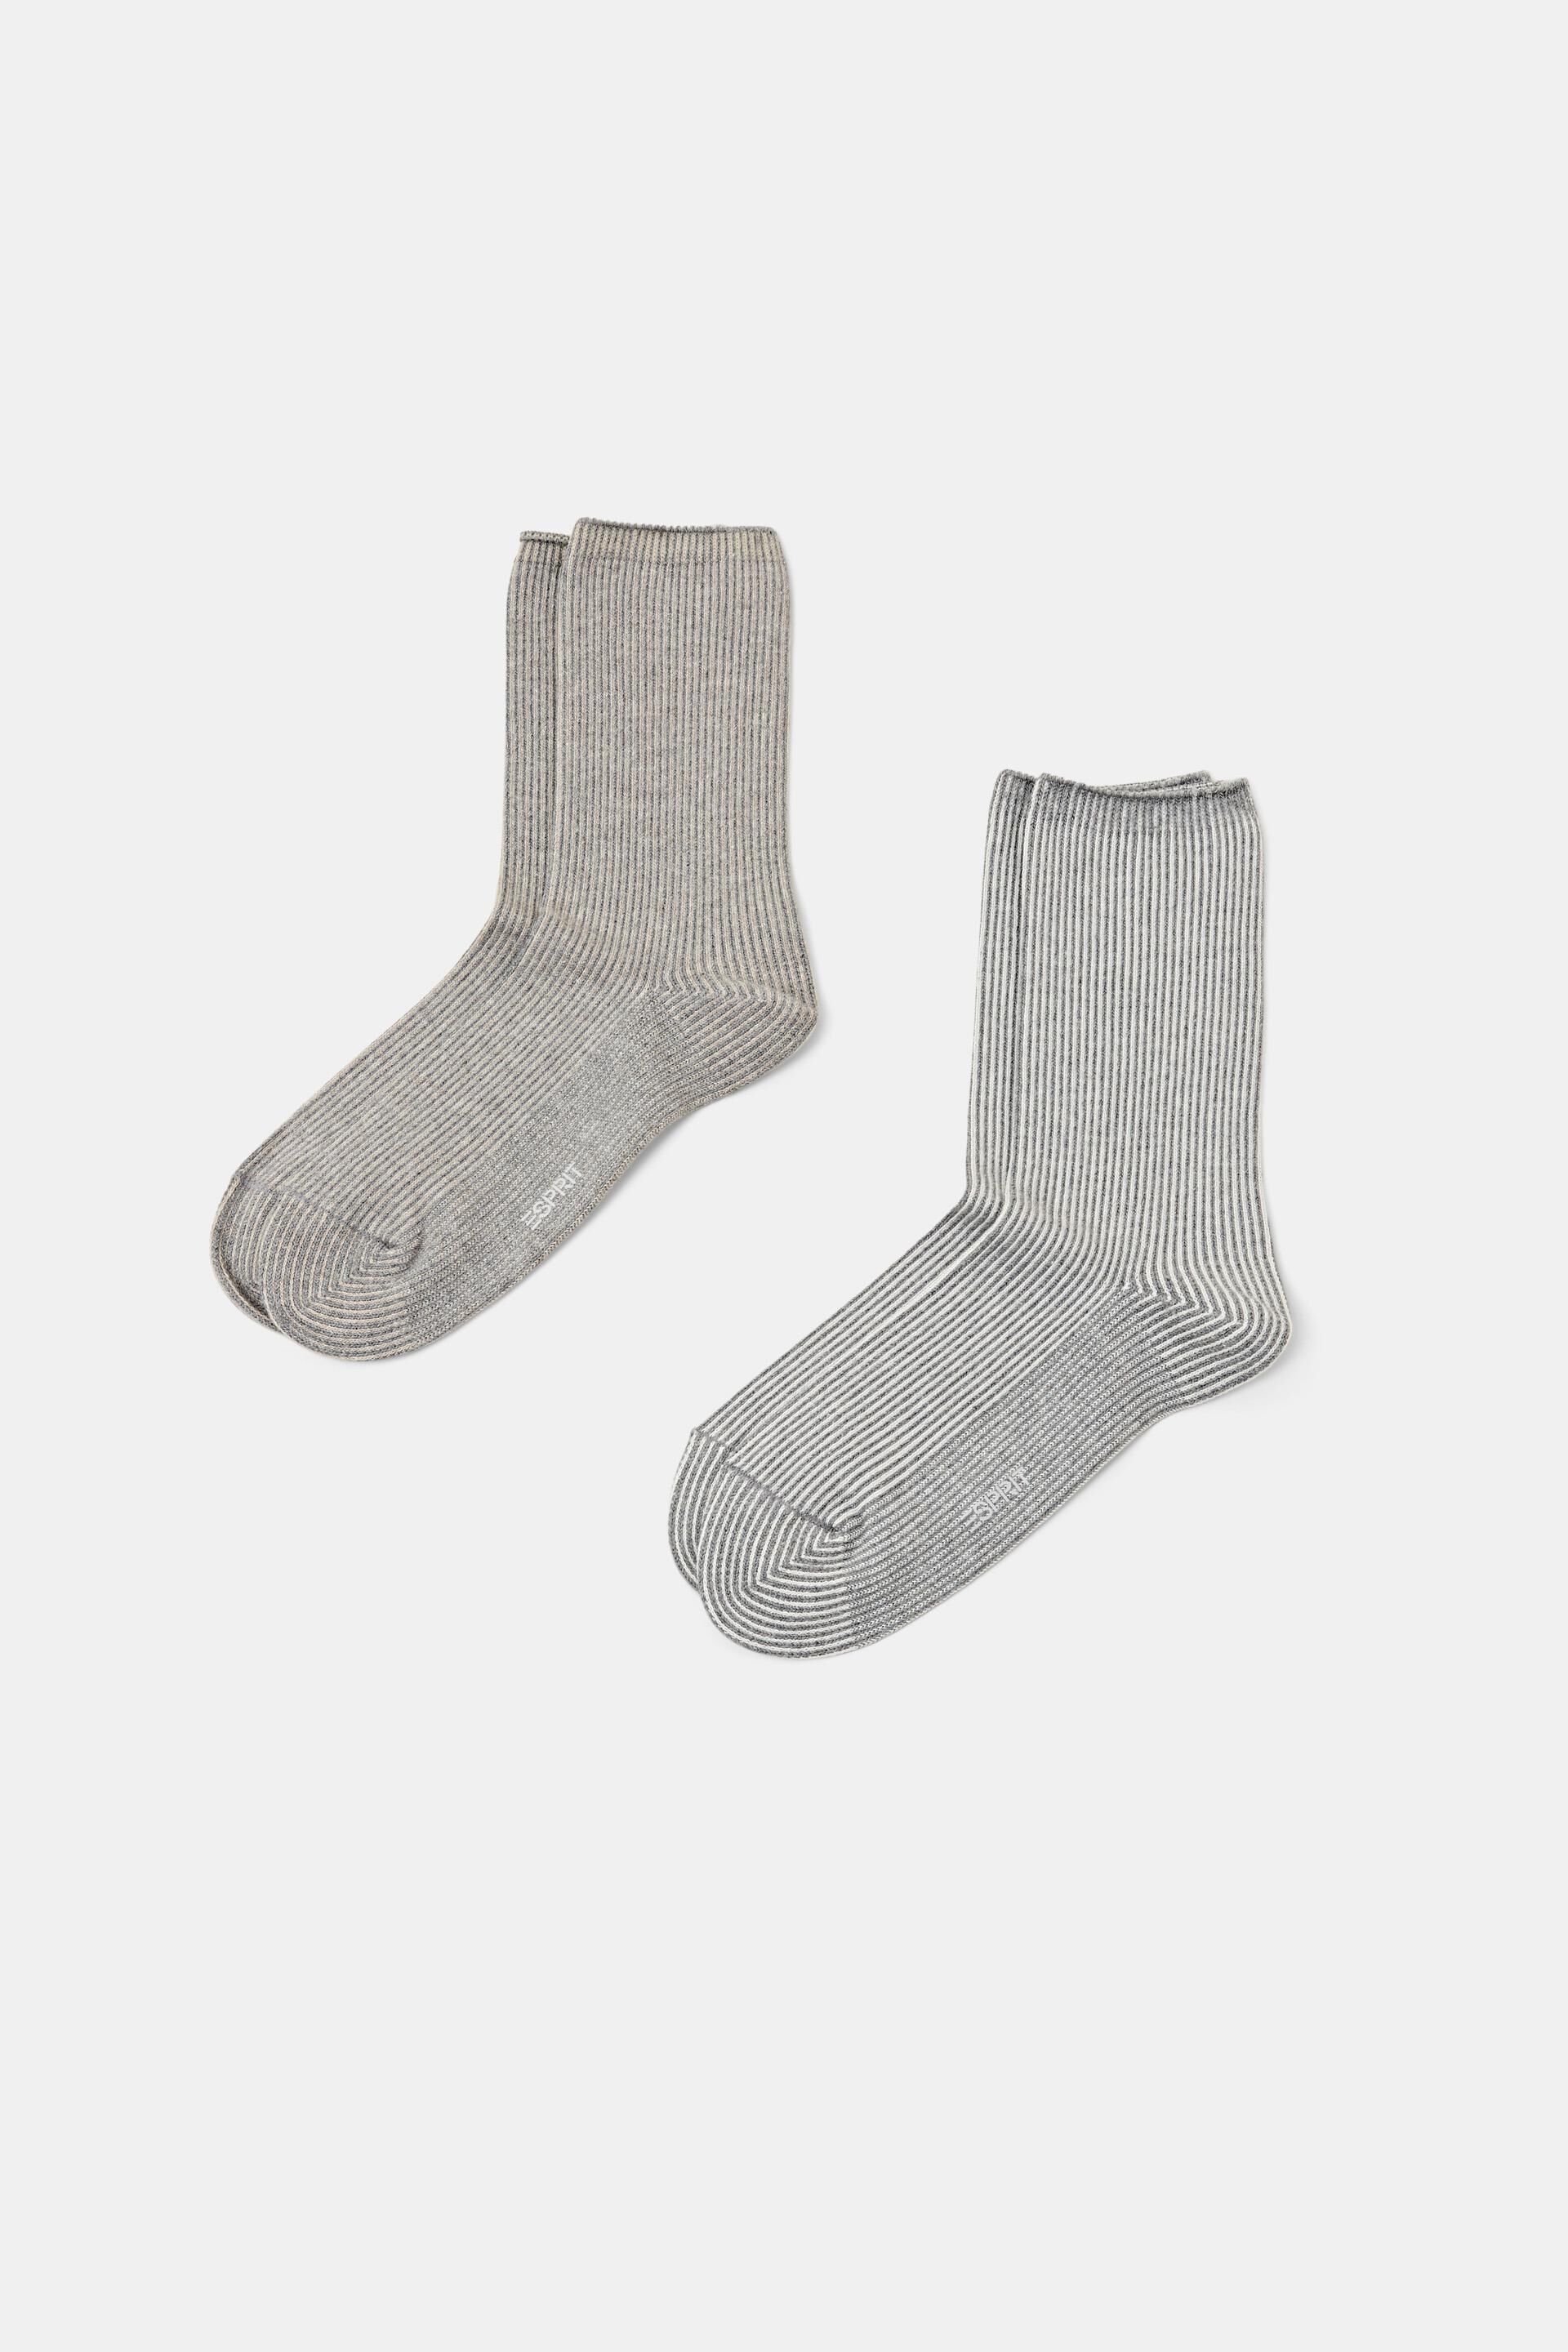 Esprit Online Store Socks